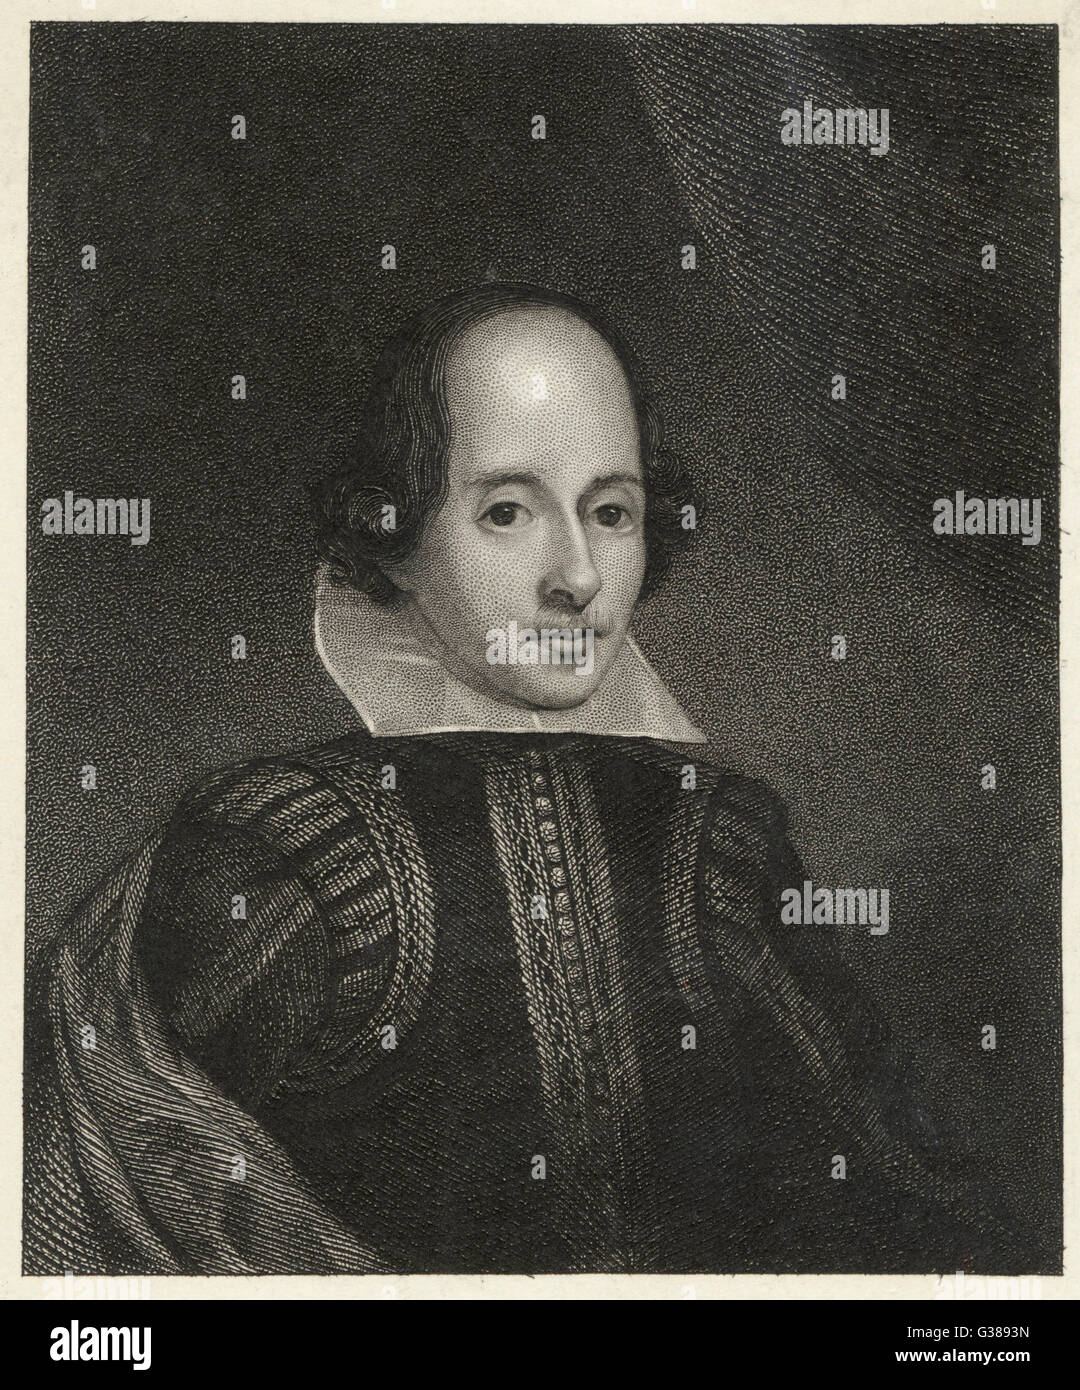 William Shakespeare Banque D'Images